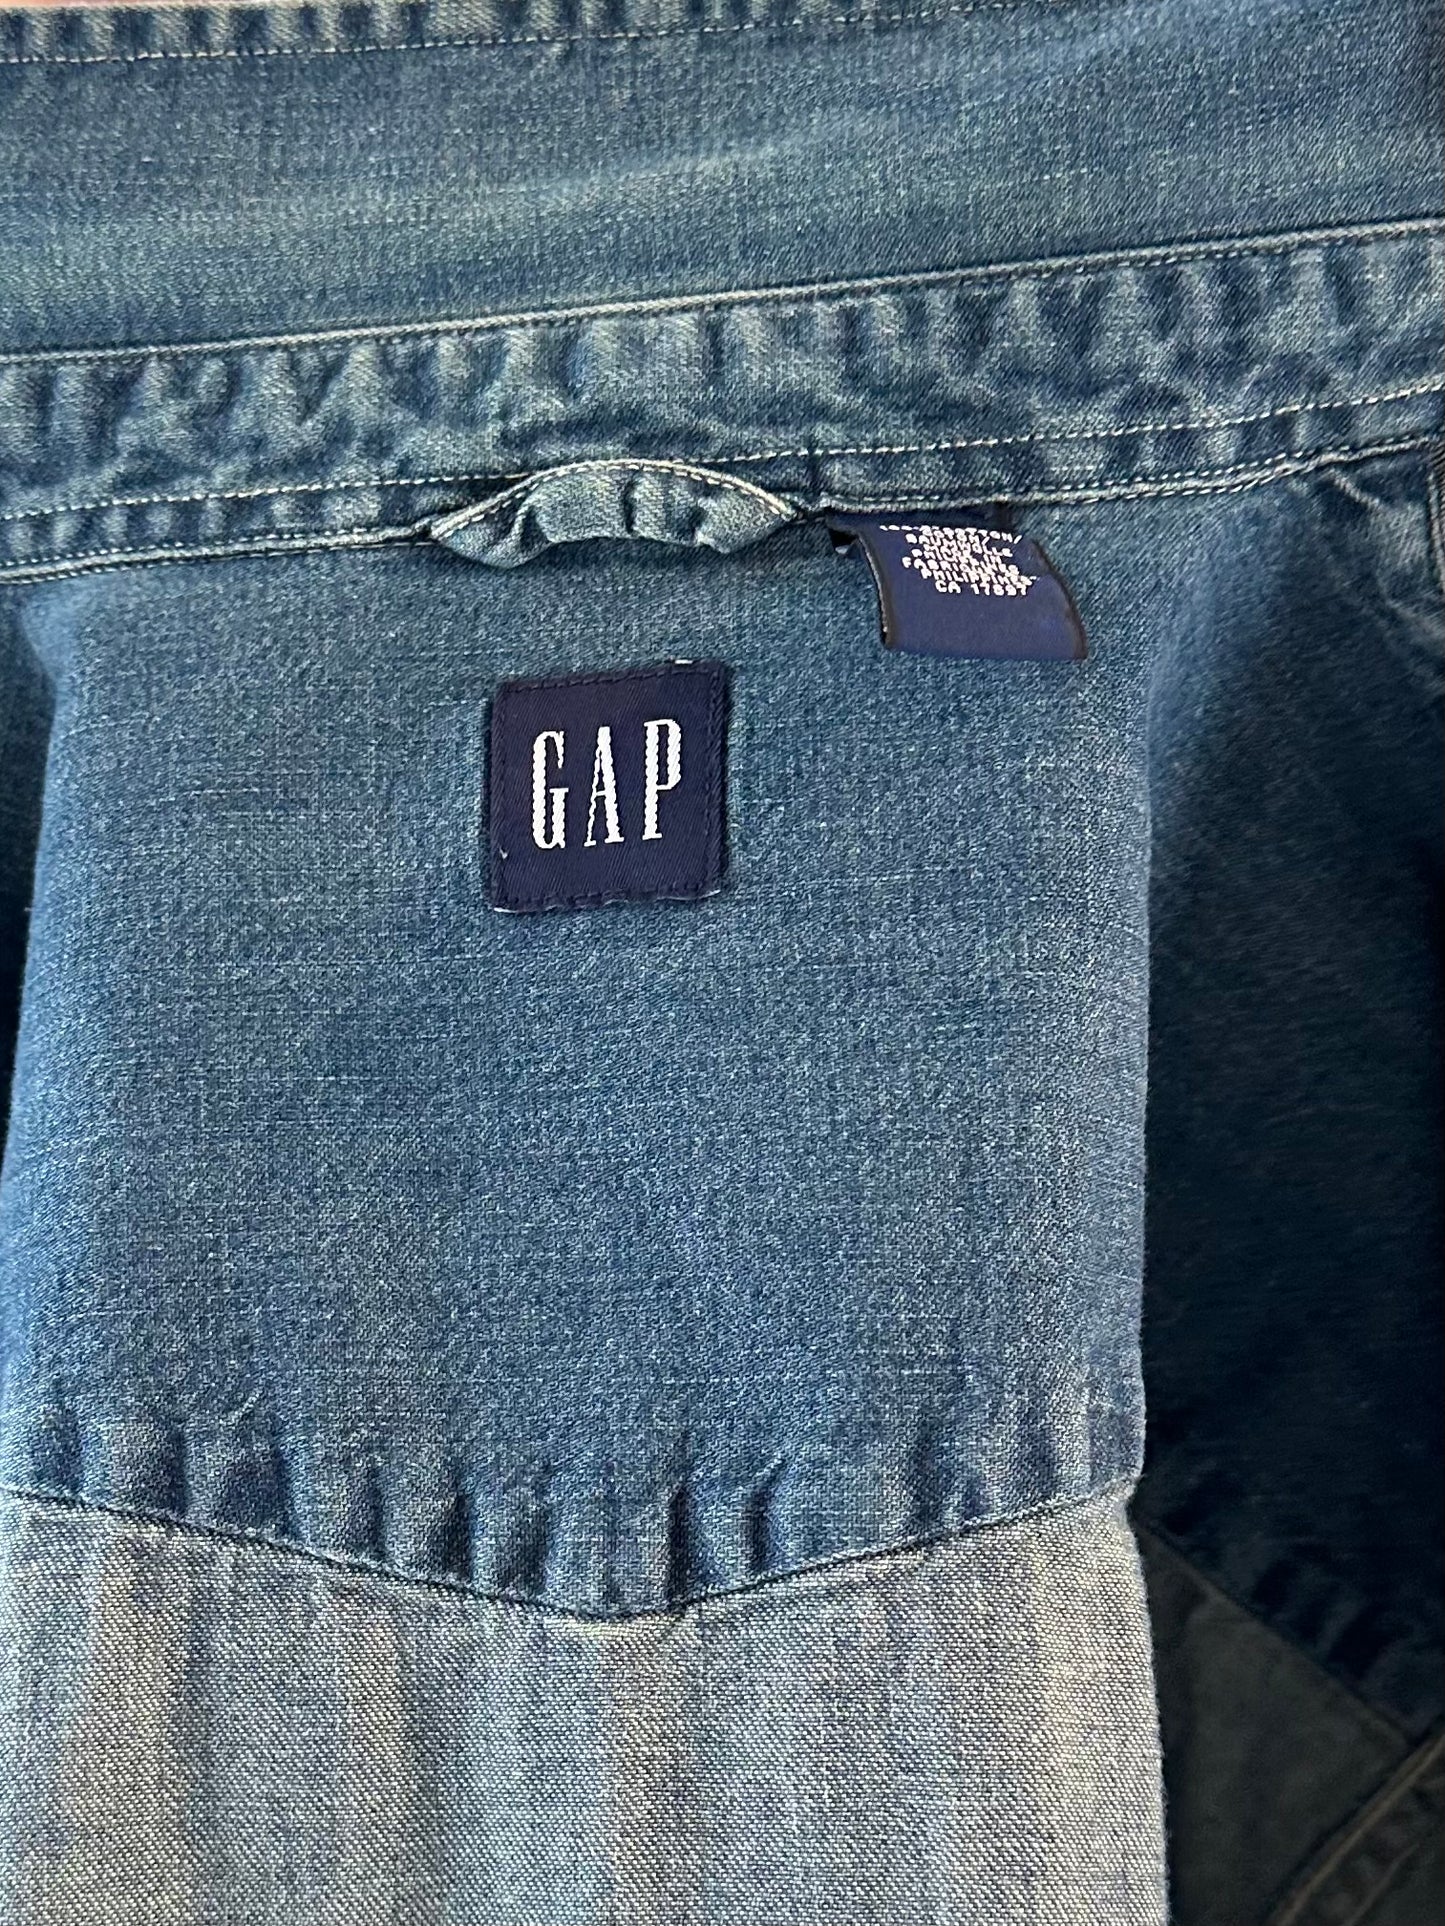 90s 'Gap' Denim Pearl Snap Shirt / Large